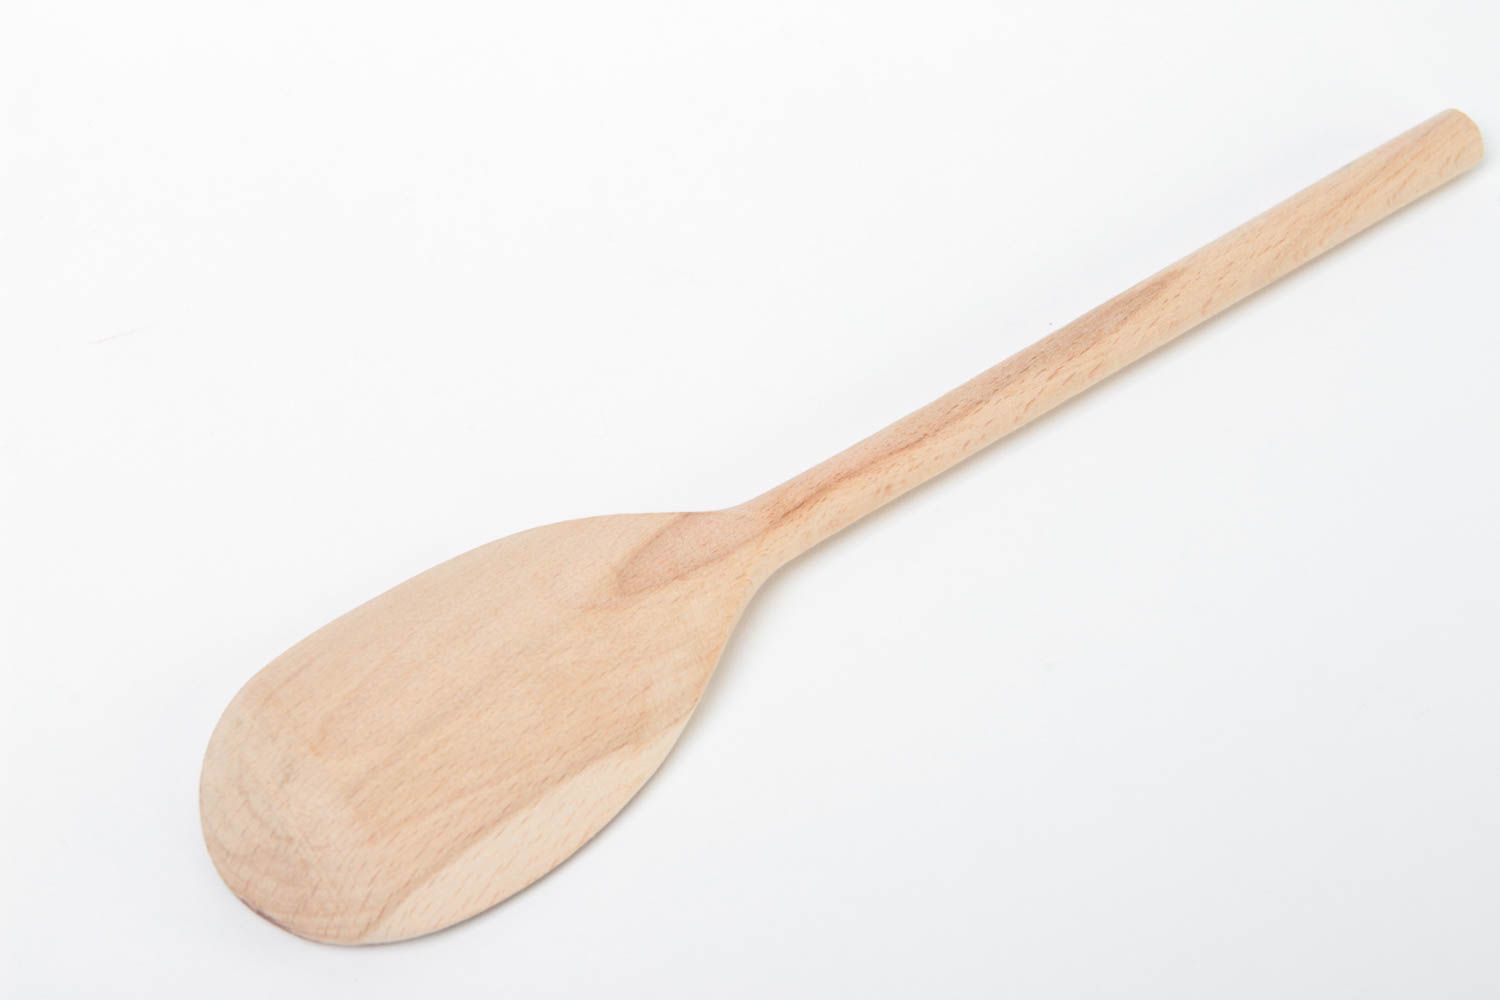 Handmade spoon wooden cutlery unusual gift decorating ideas kitchen accessories photo 4